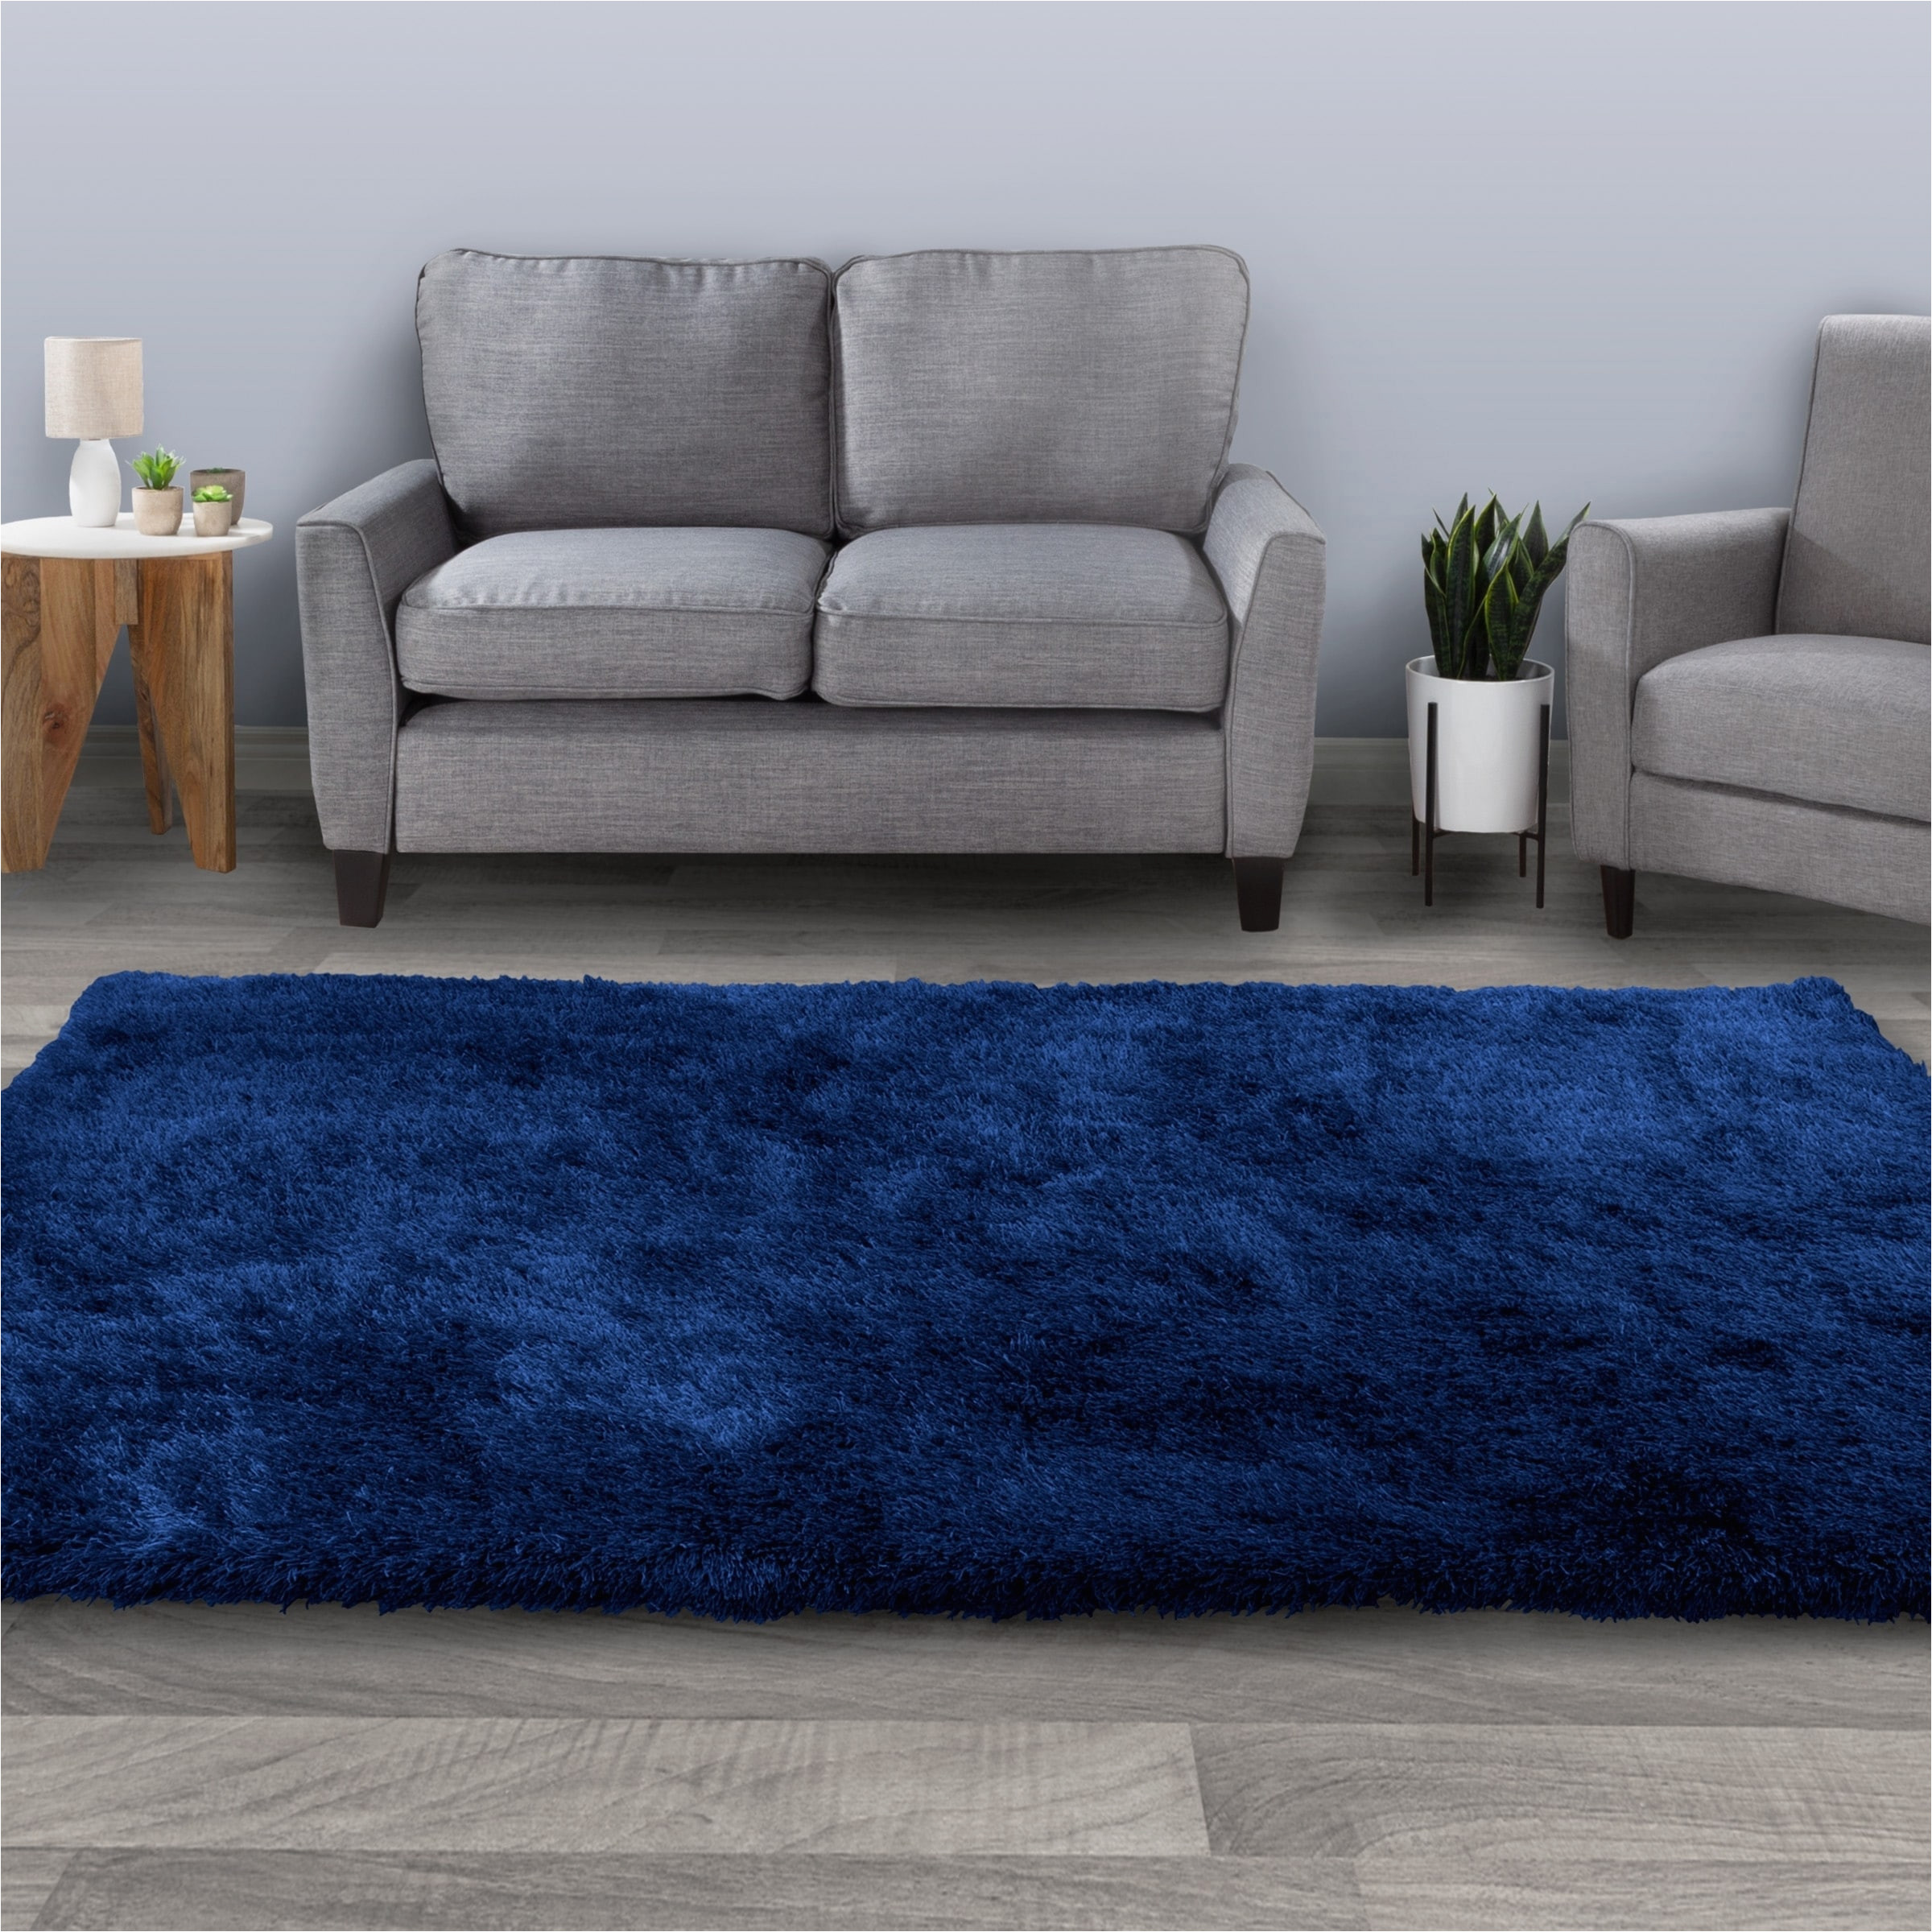 Navy Blue Shaggy Raggy Rug Windsor Home Shag area Rug- Plush Throw Carpet- Cozy Modern Design …